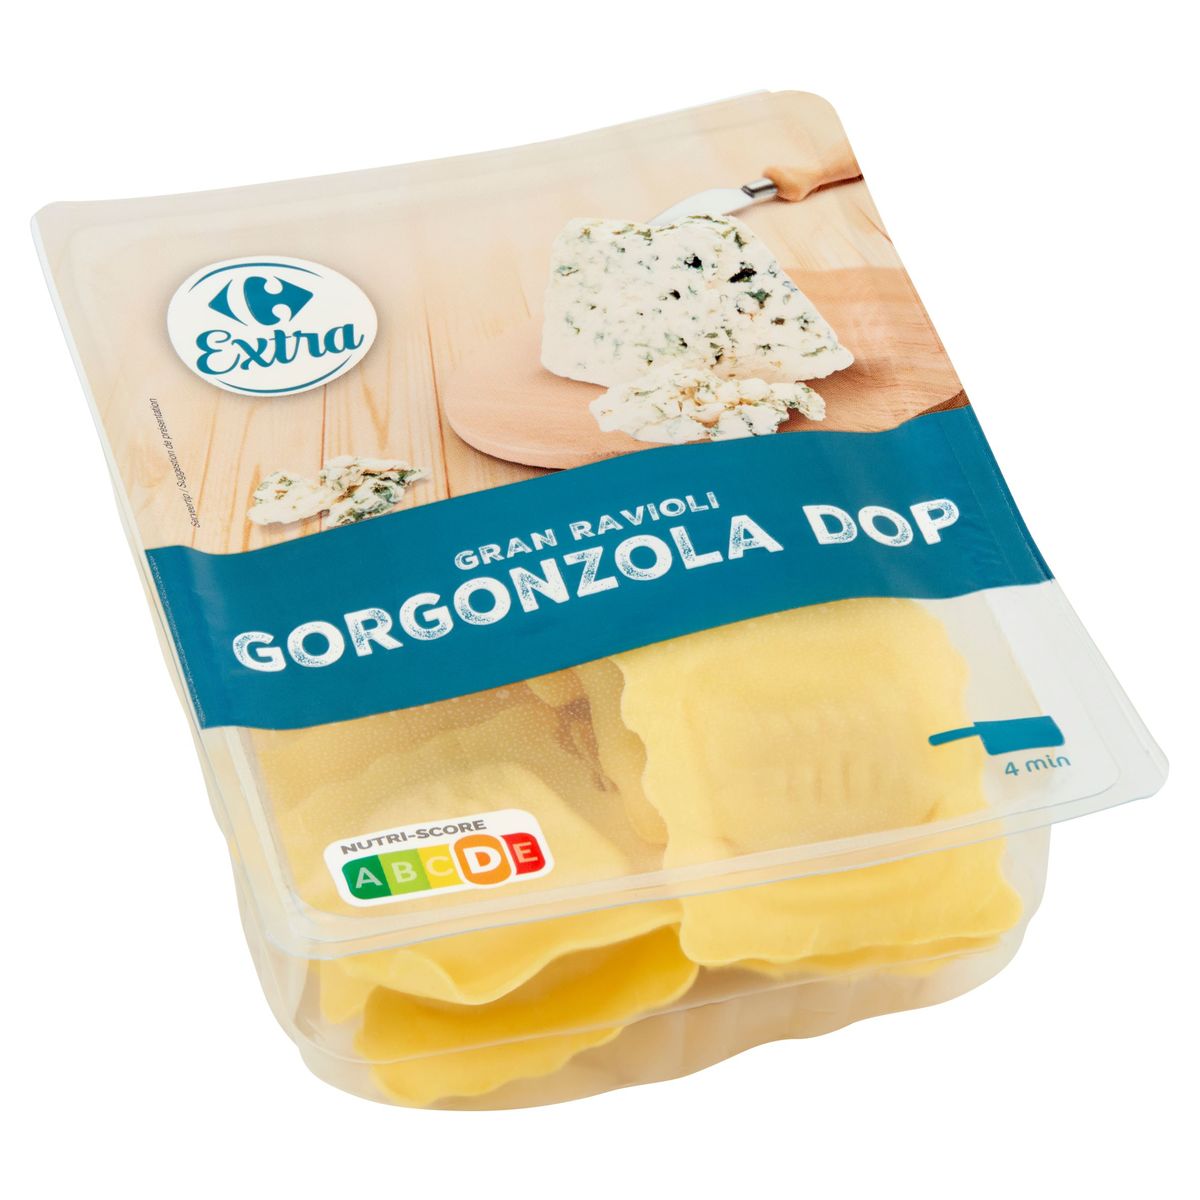 Carrefour Extra Gran Ravioli Gorgonzola Dop 250 g